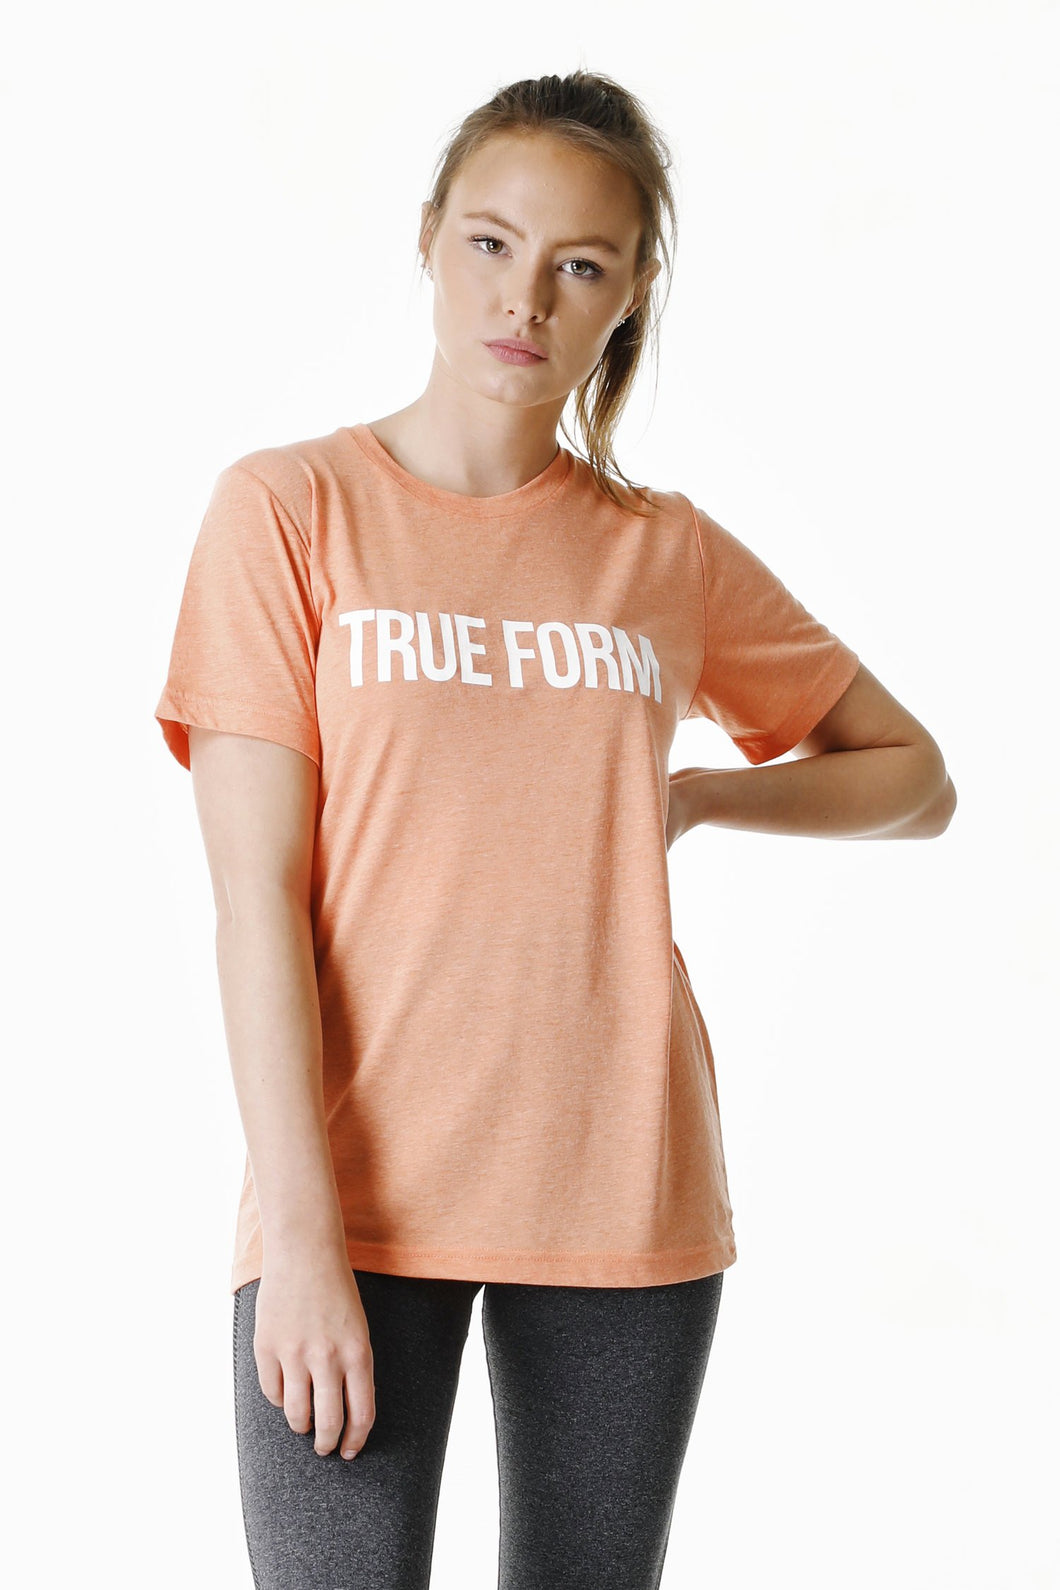 Unisex Peach Statement Tee/T-shirt of gym clothing brand True Form UK